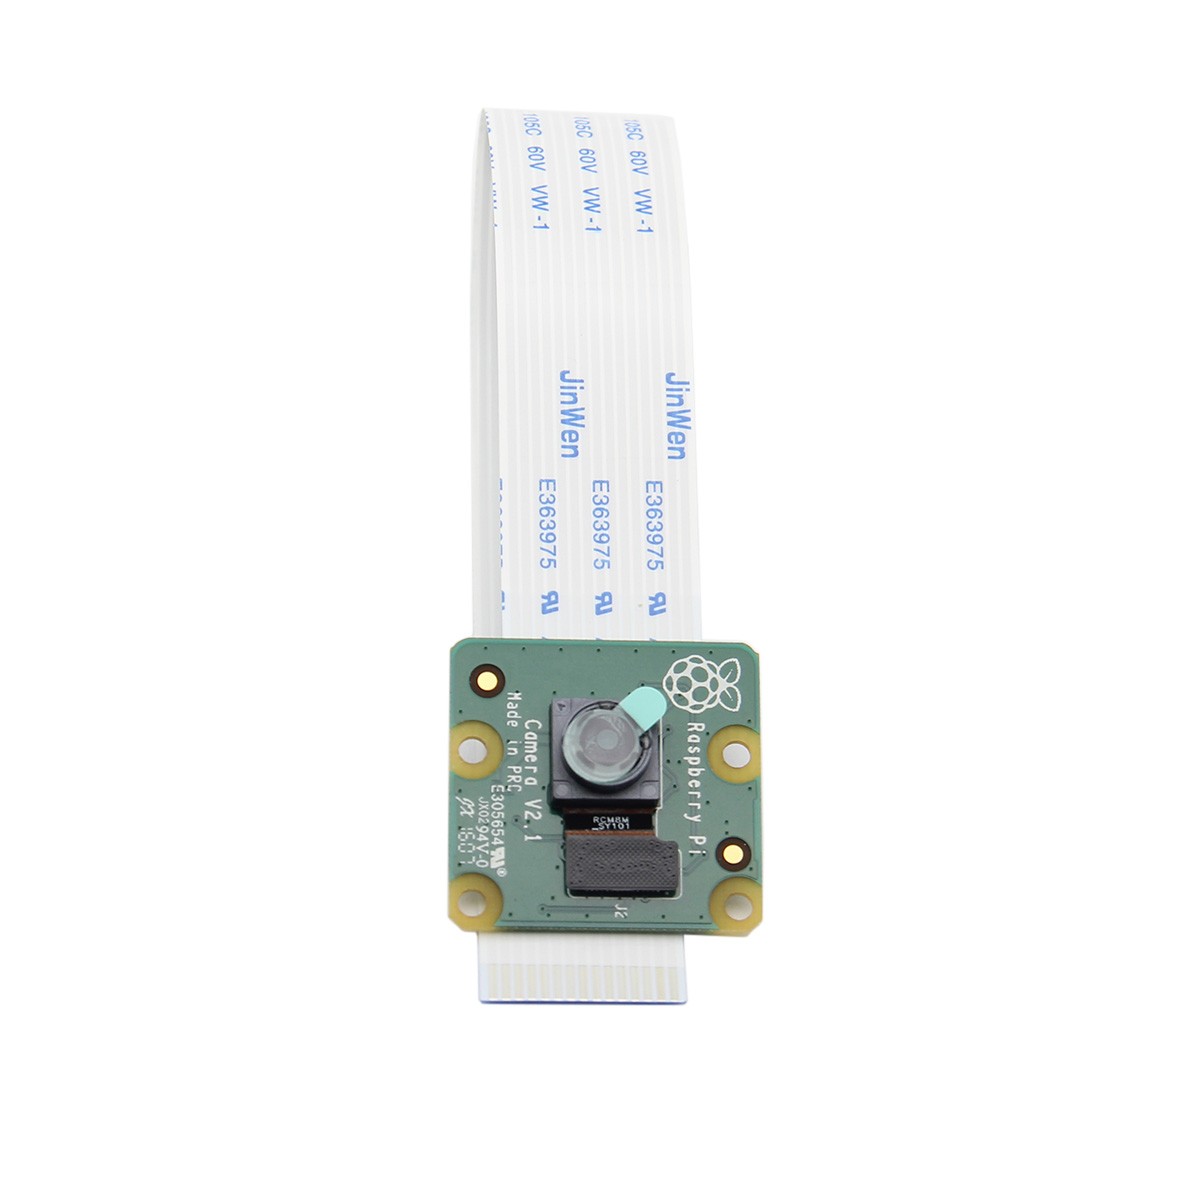 Raspberry Pi V2 Official 8 Megapixel HD Camera Board With IMX219 PQ CMOS Image Sensor 9